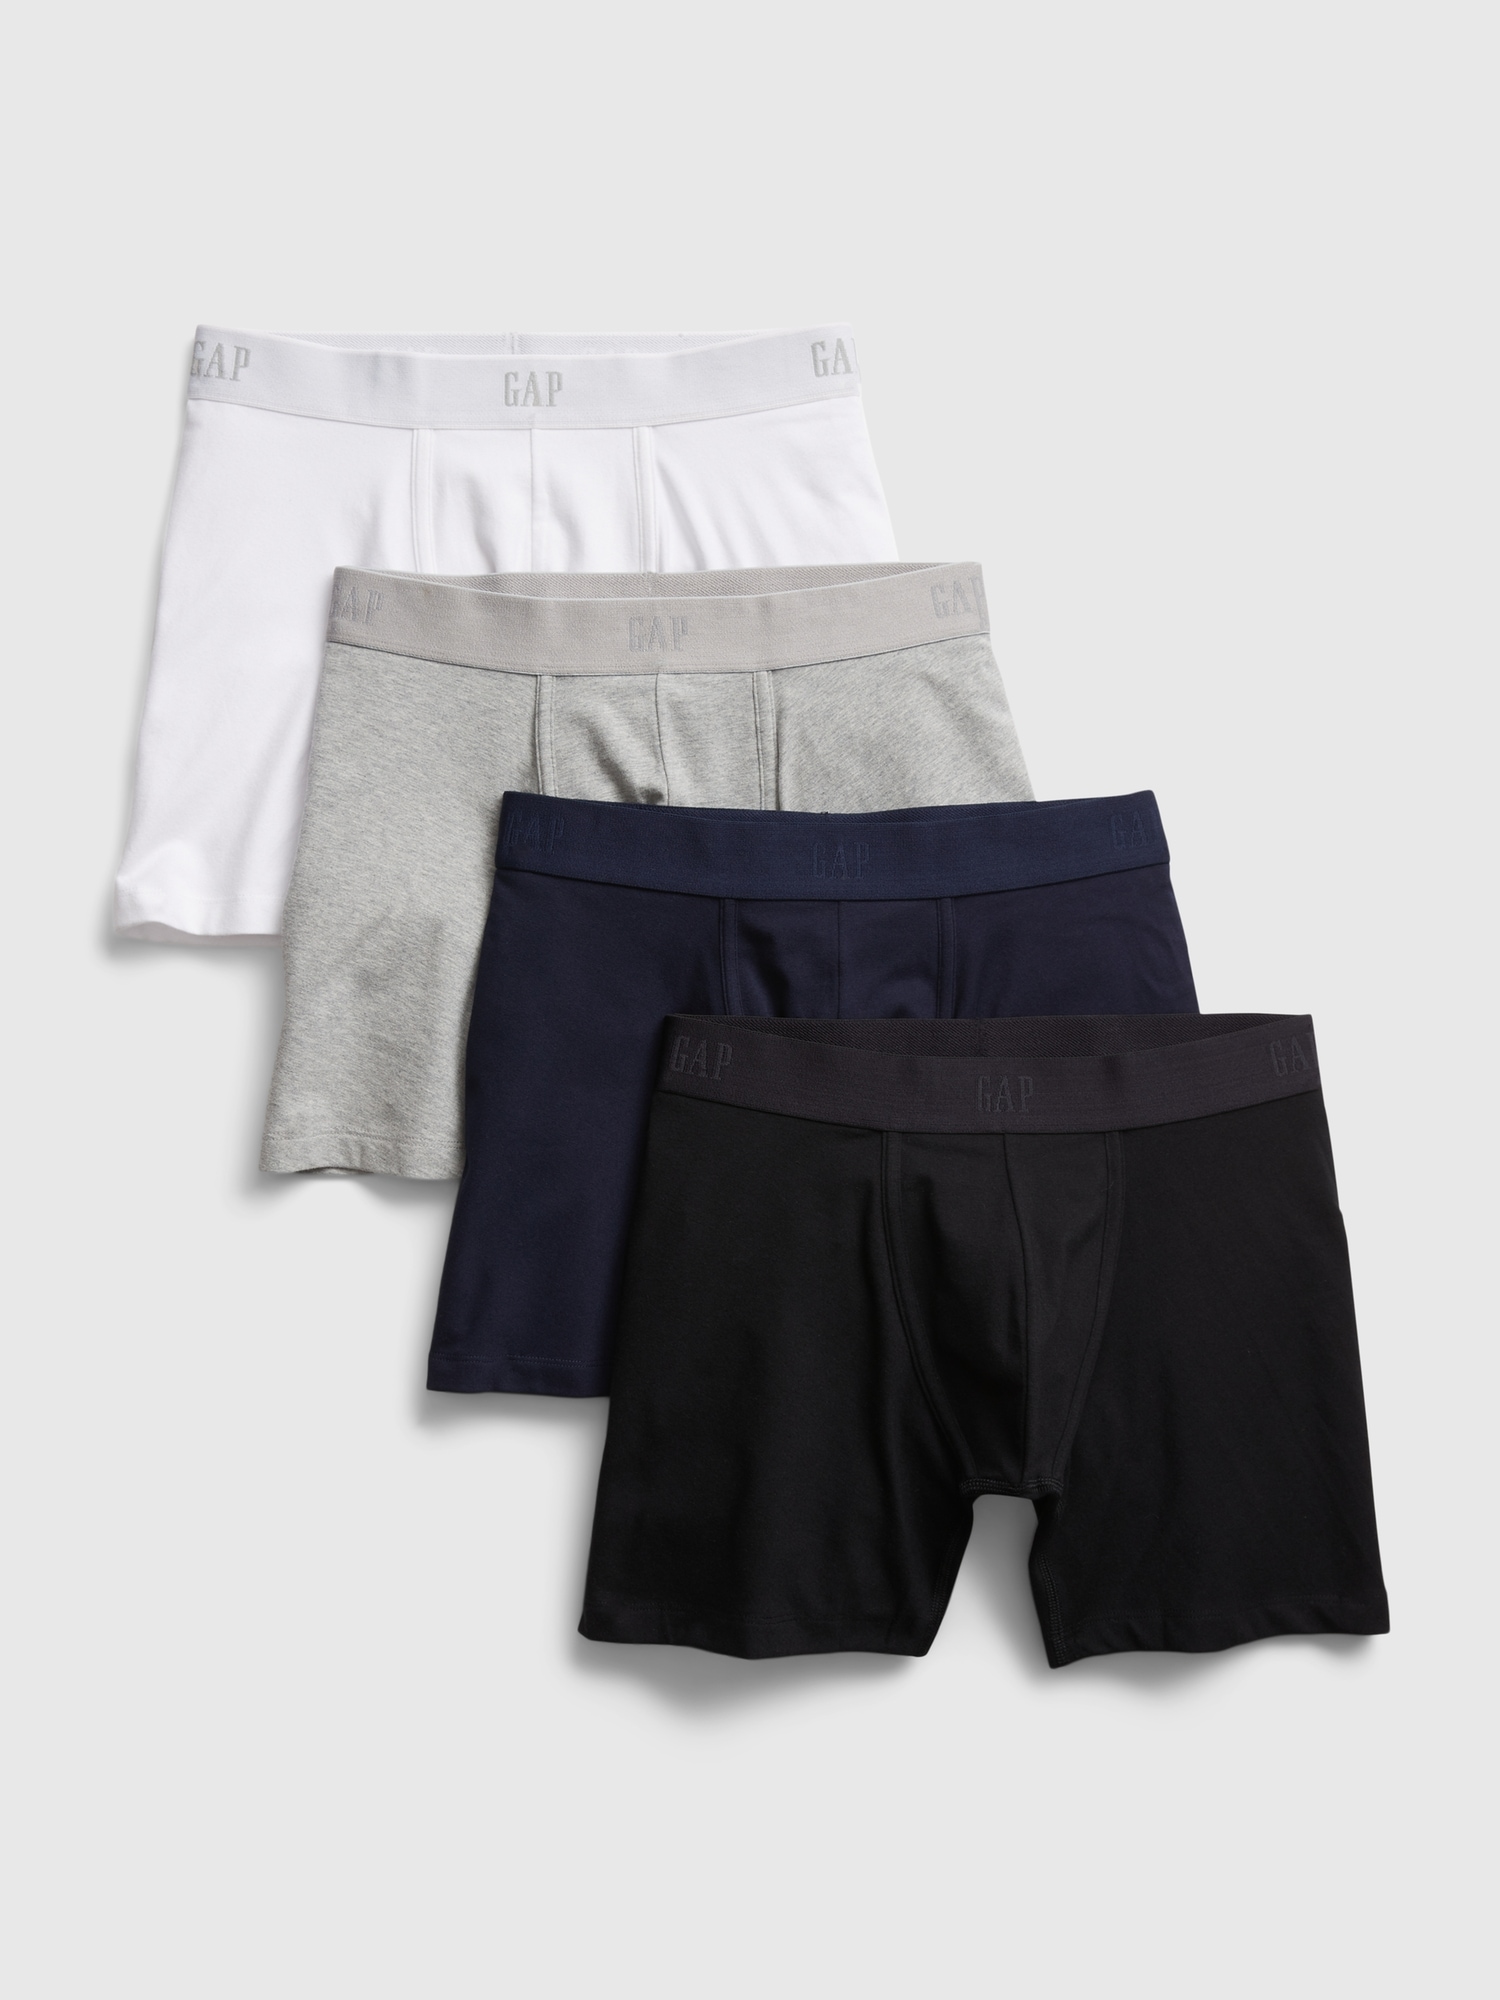 Men's Boxers GAP Cotton Mix Underwear